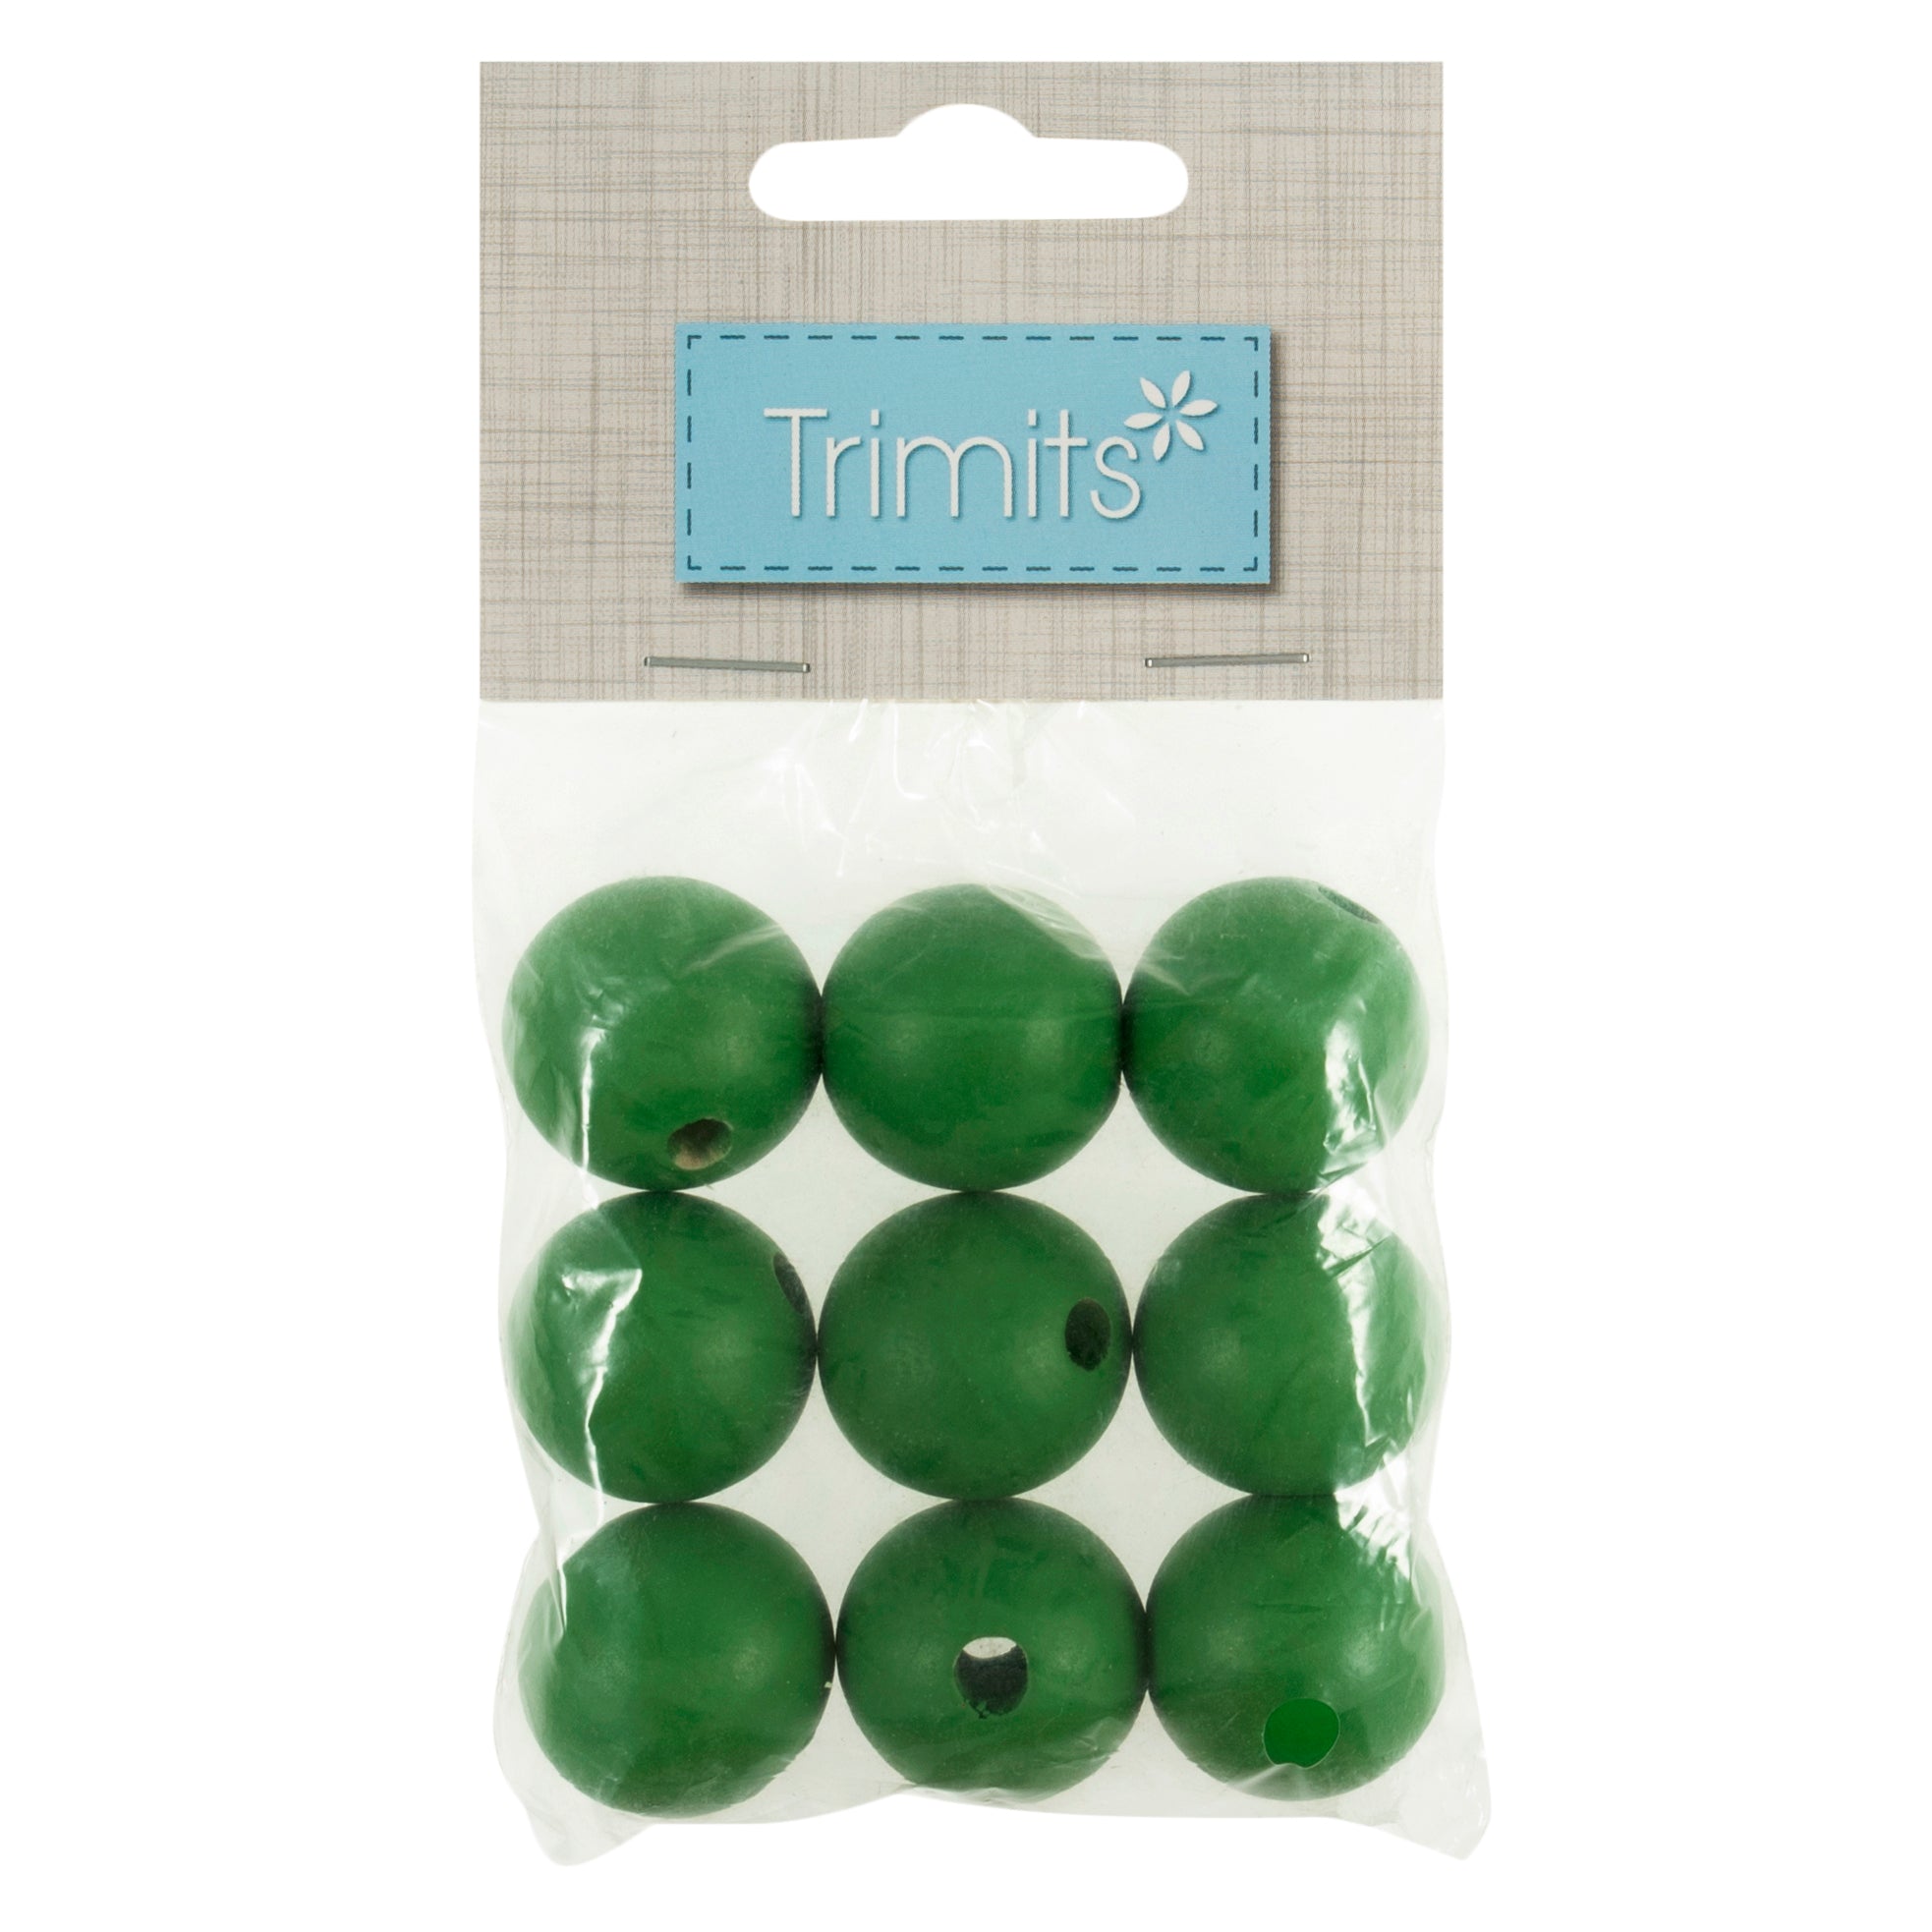 Trimits 25mm Wooden Craft Beads for Macramé - Green